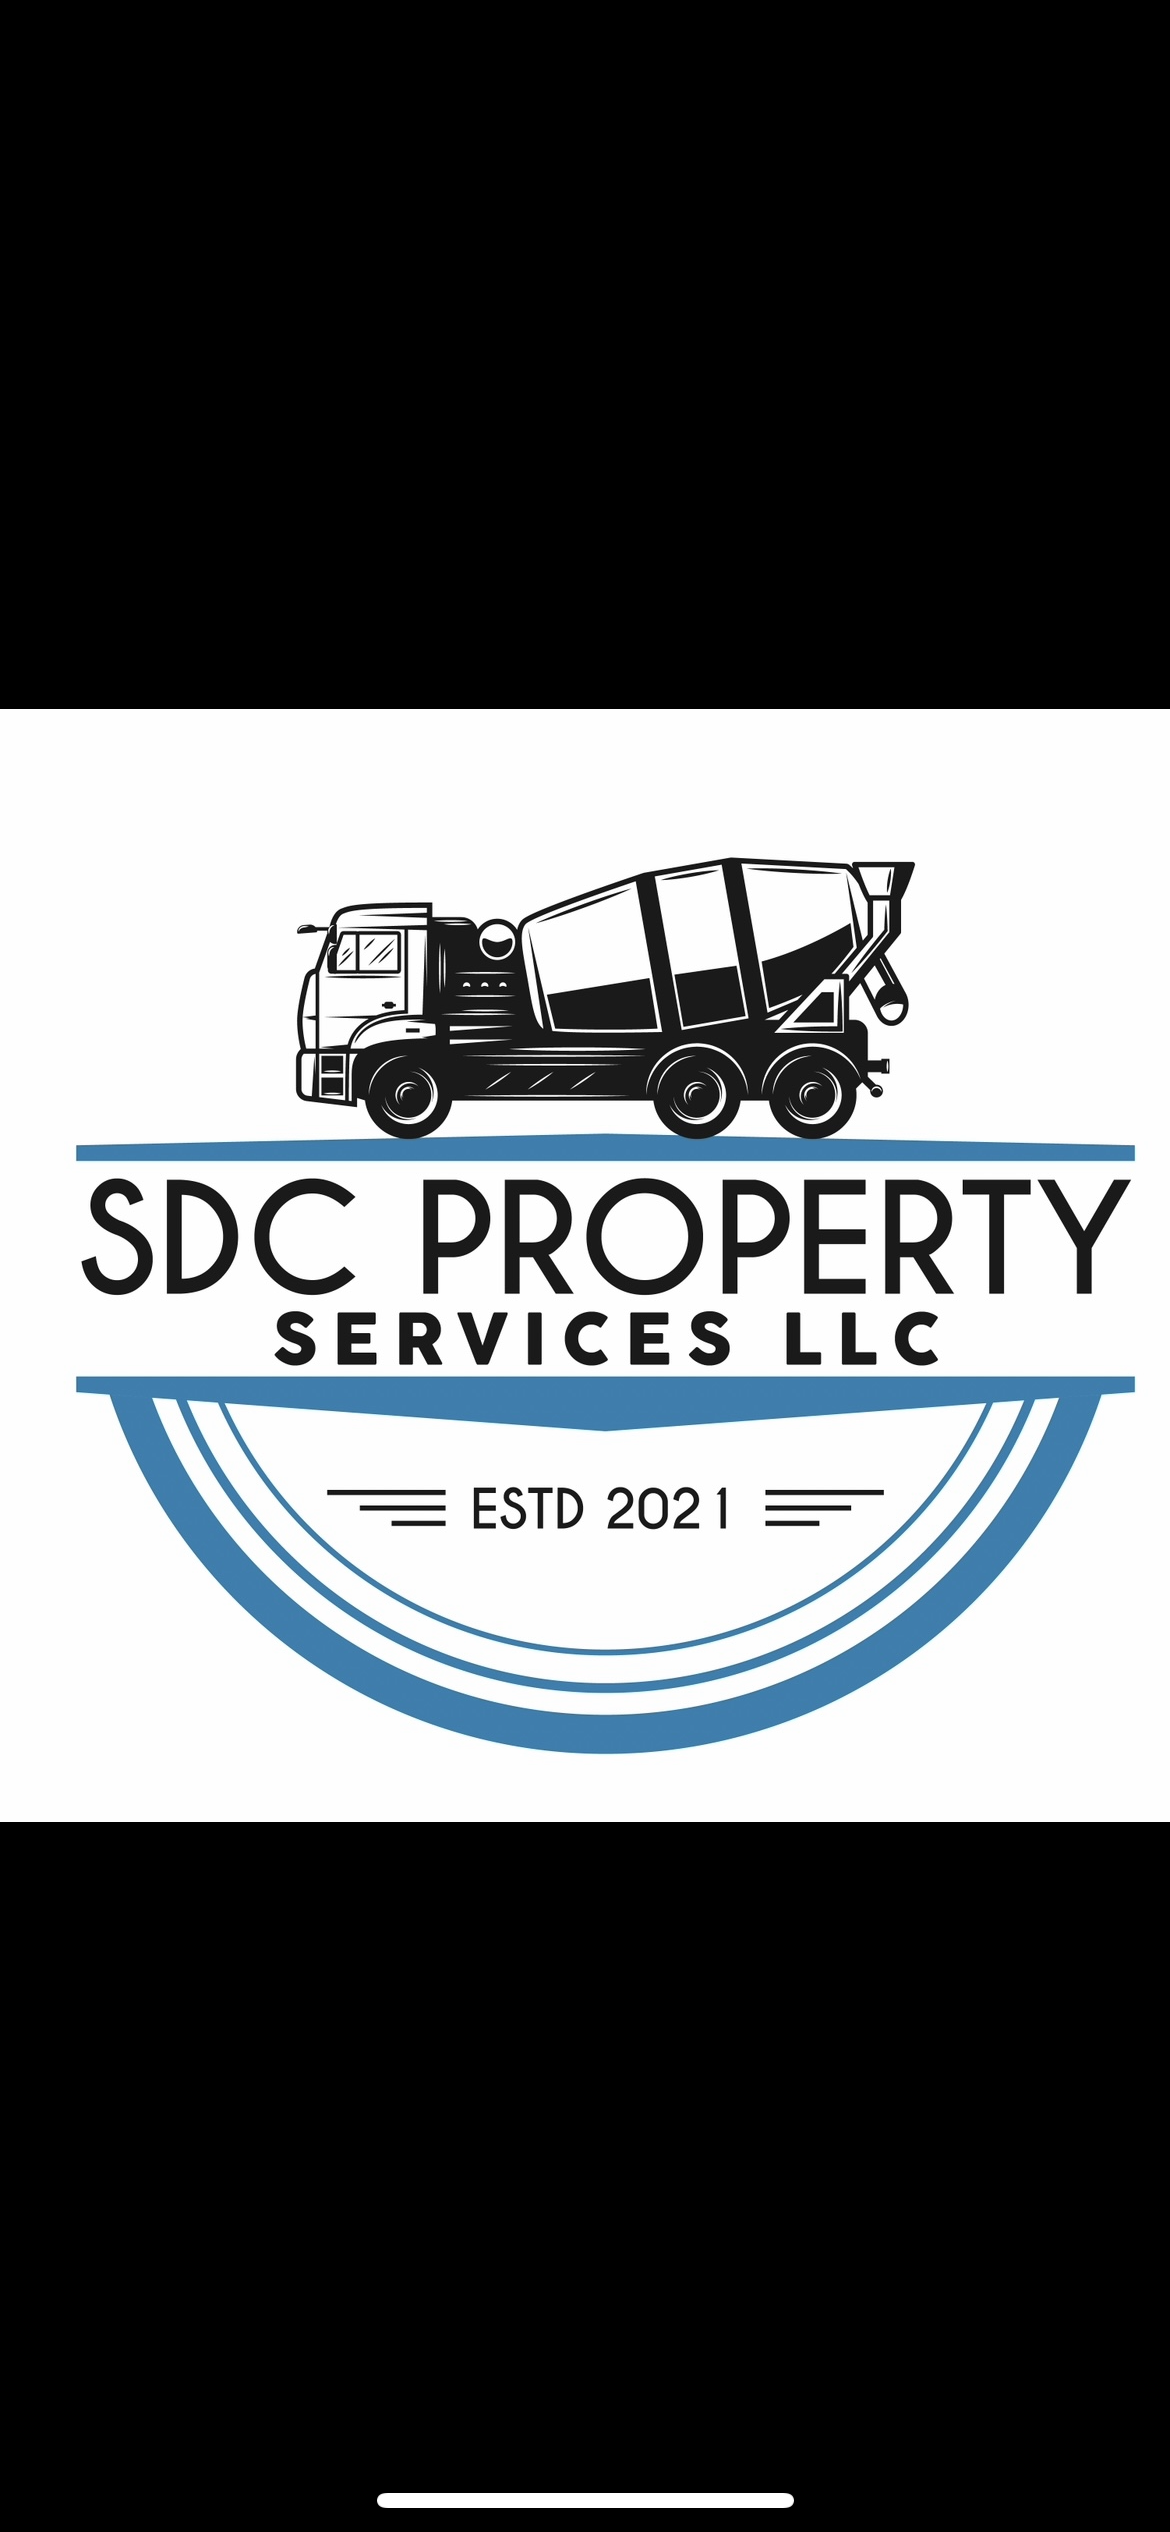 SDC Property Services LLC